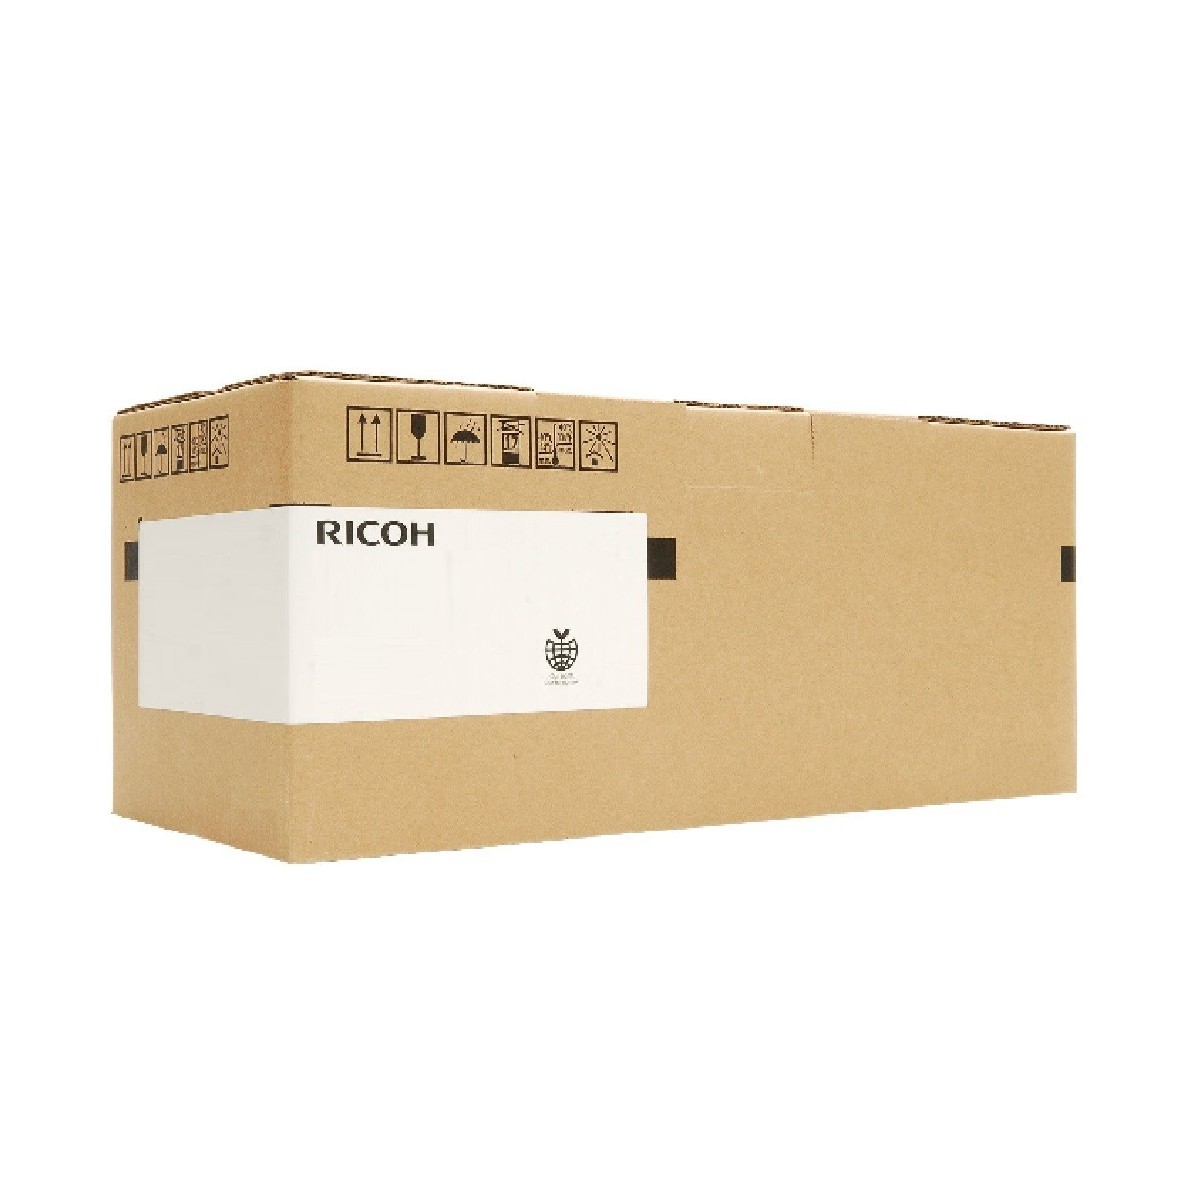 Ricoh B2593031 - Power supply - 1 pc(s)